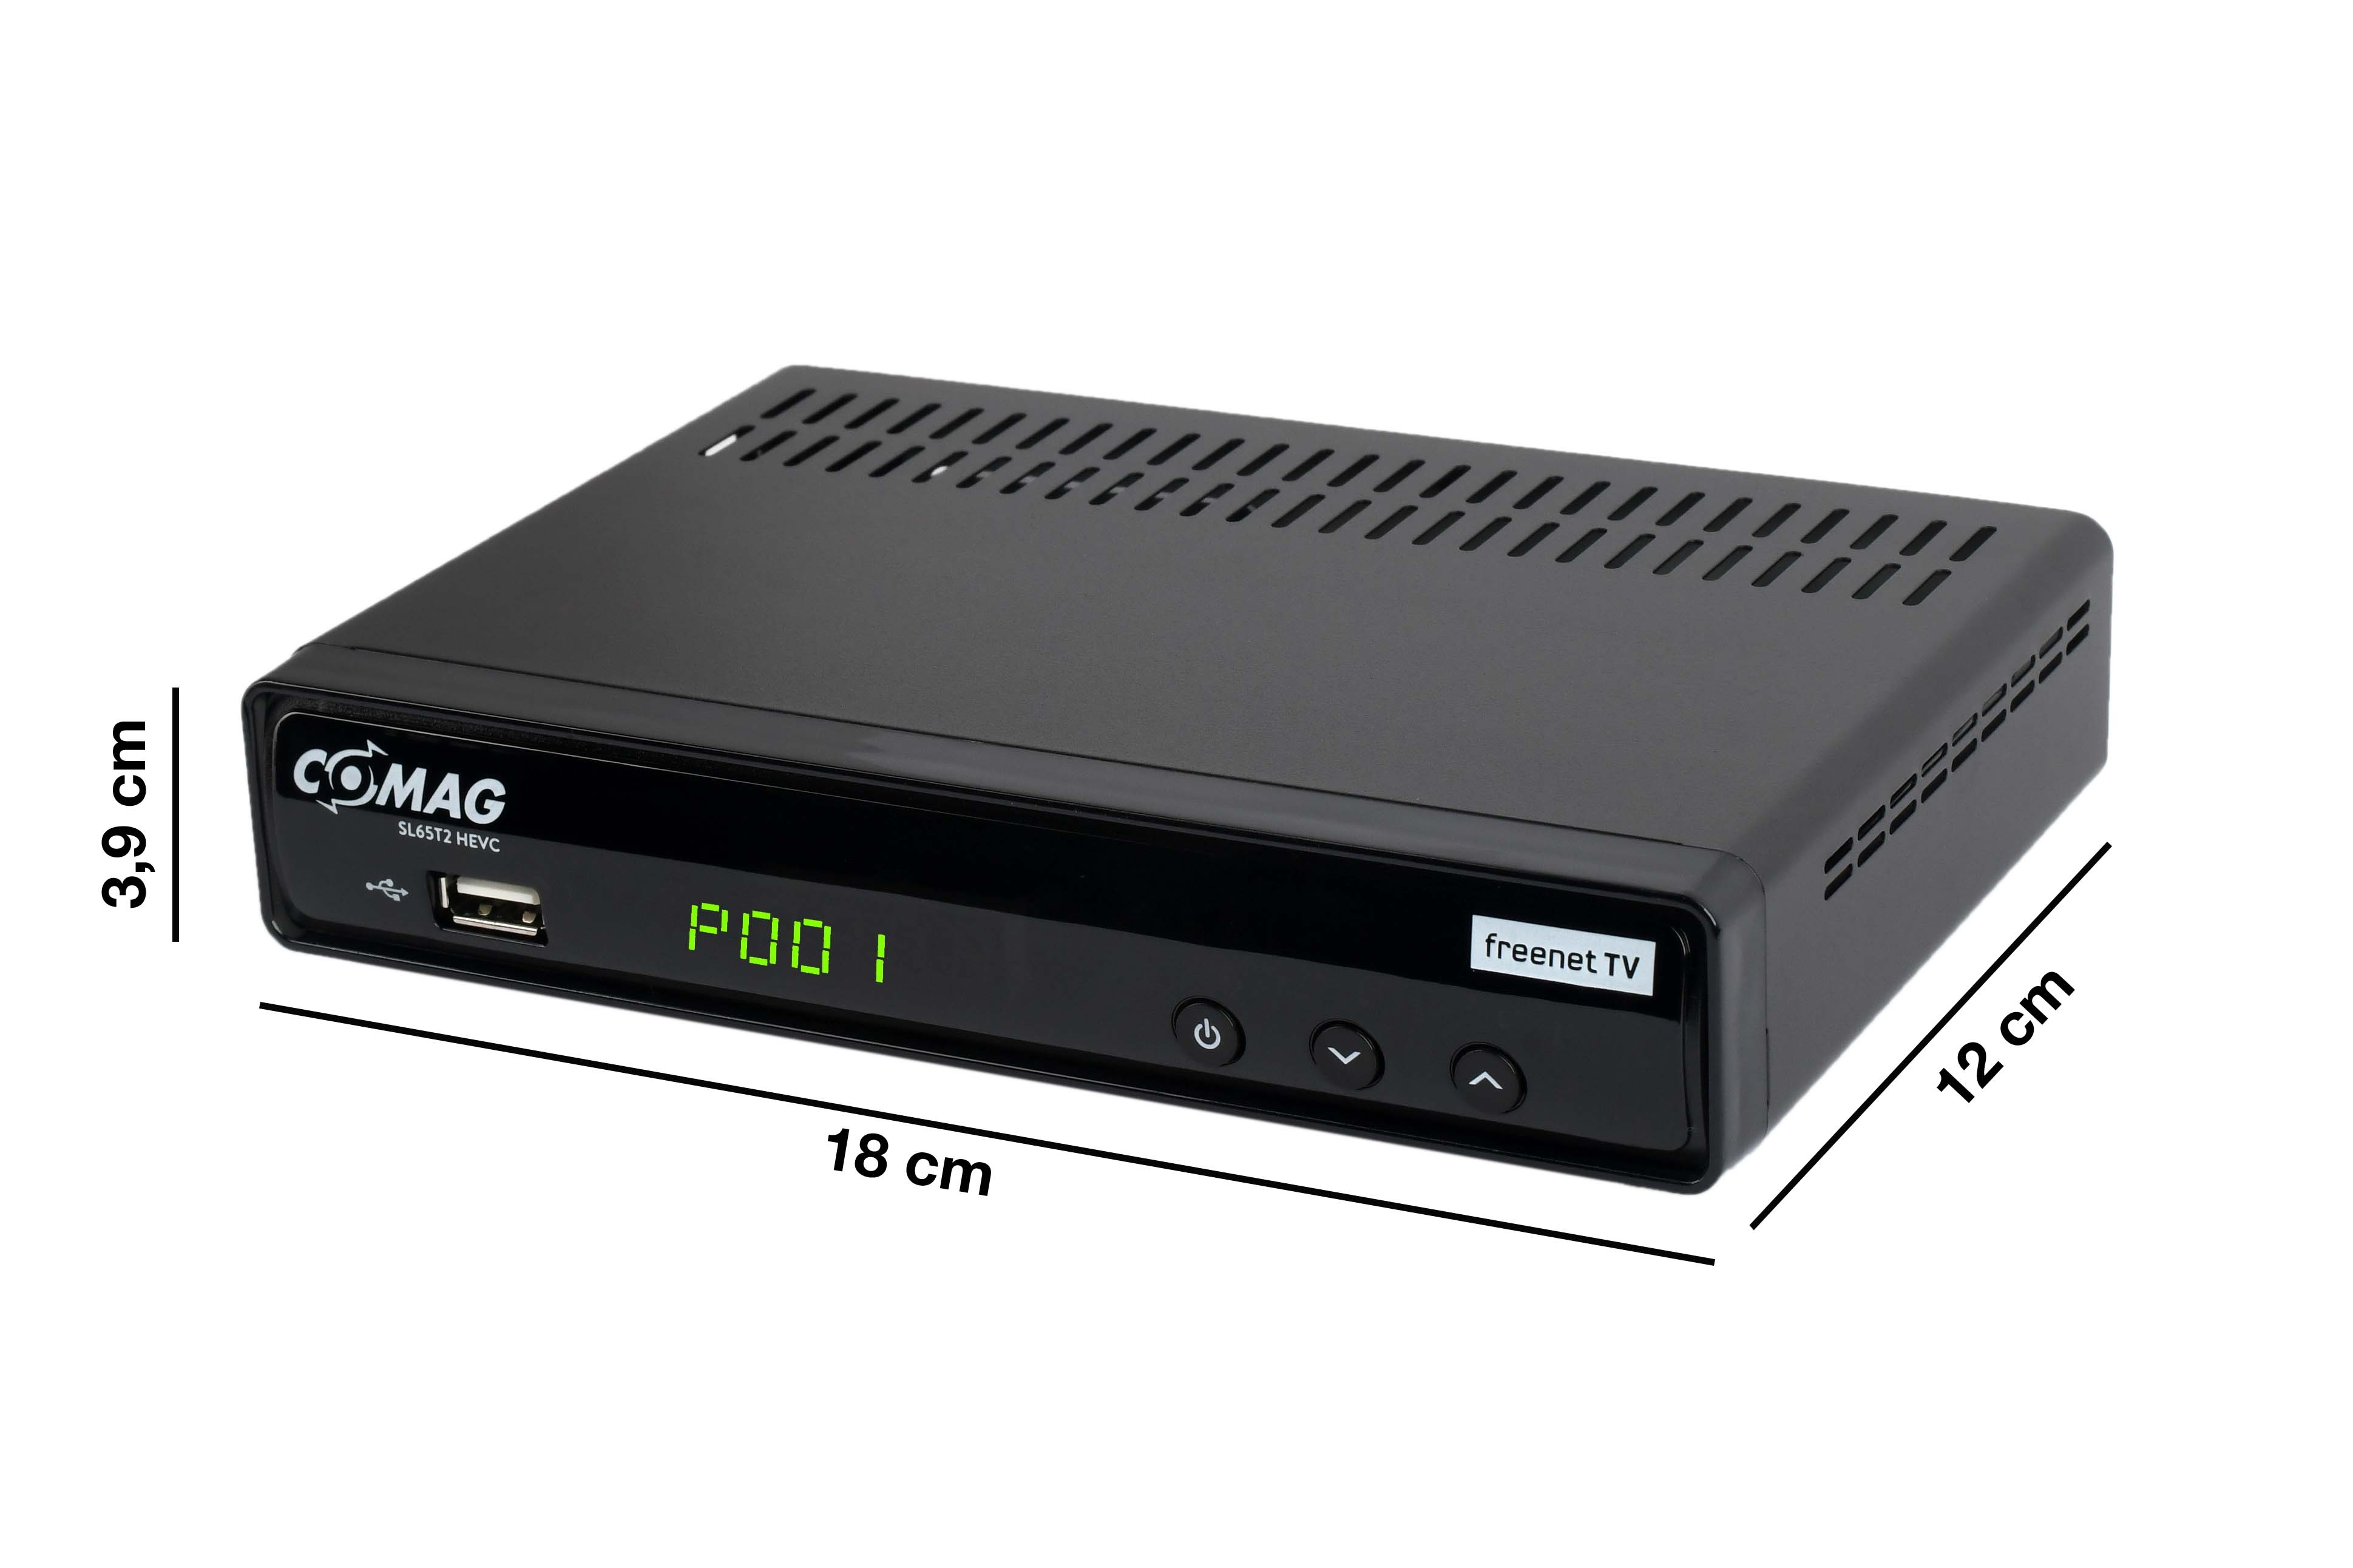 COMAG SL65T2 Home Bundel (HDTV, DVB-T-Receiver schwarz) DVB-T2 (H.264), (H.265), DVB-T2 DVB-T, PVR-Funktion